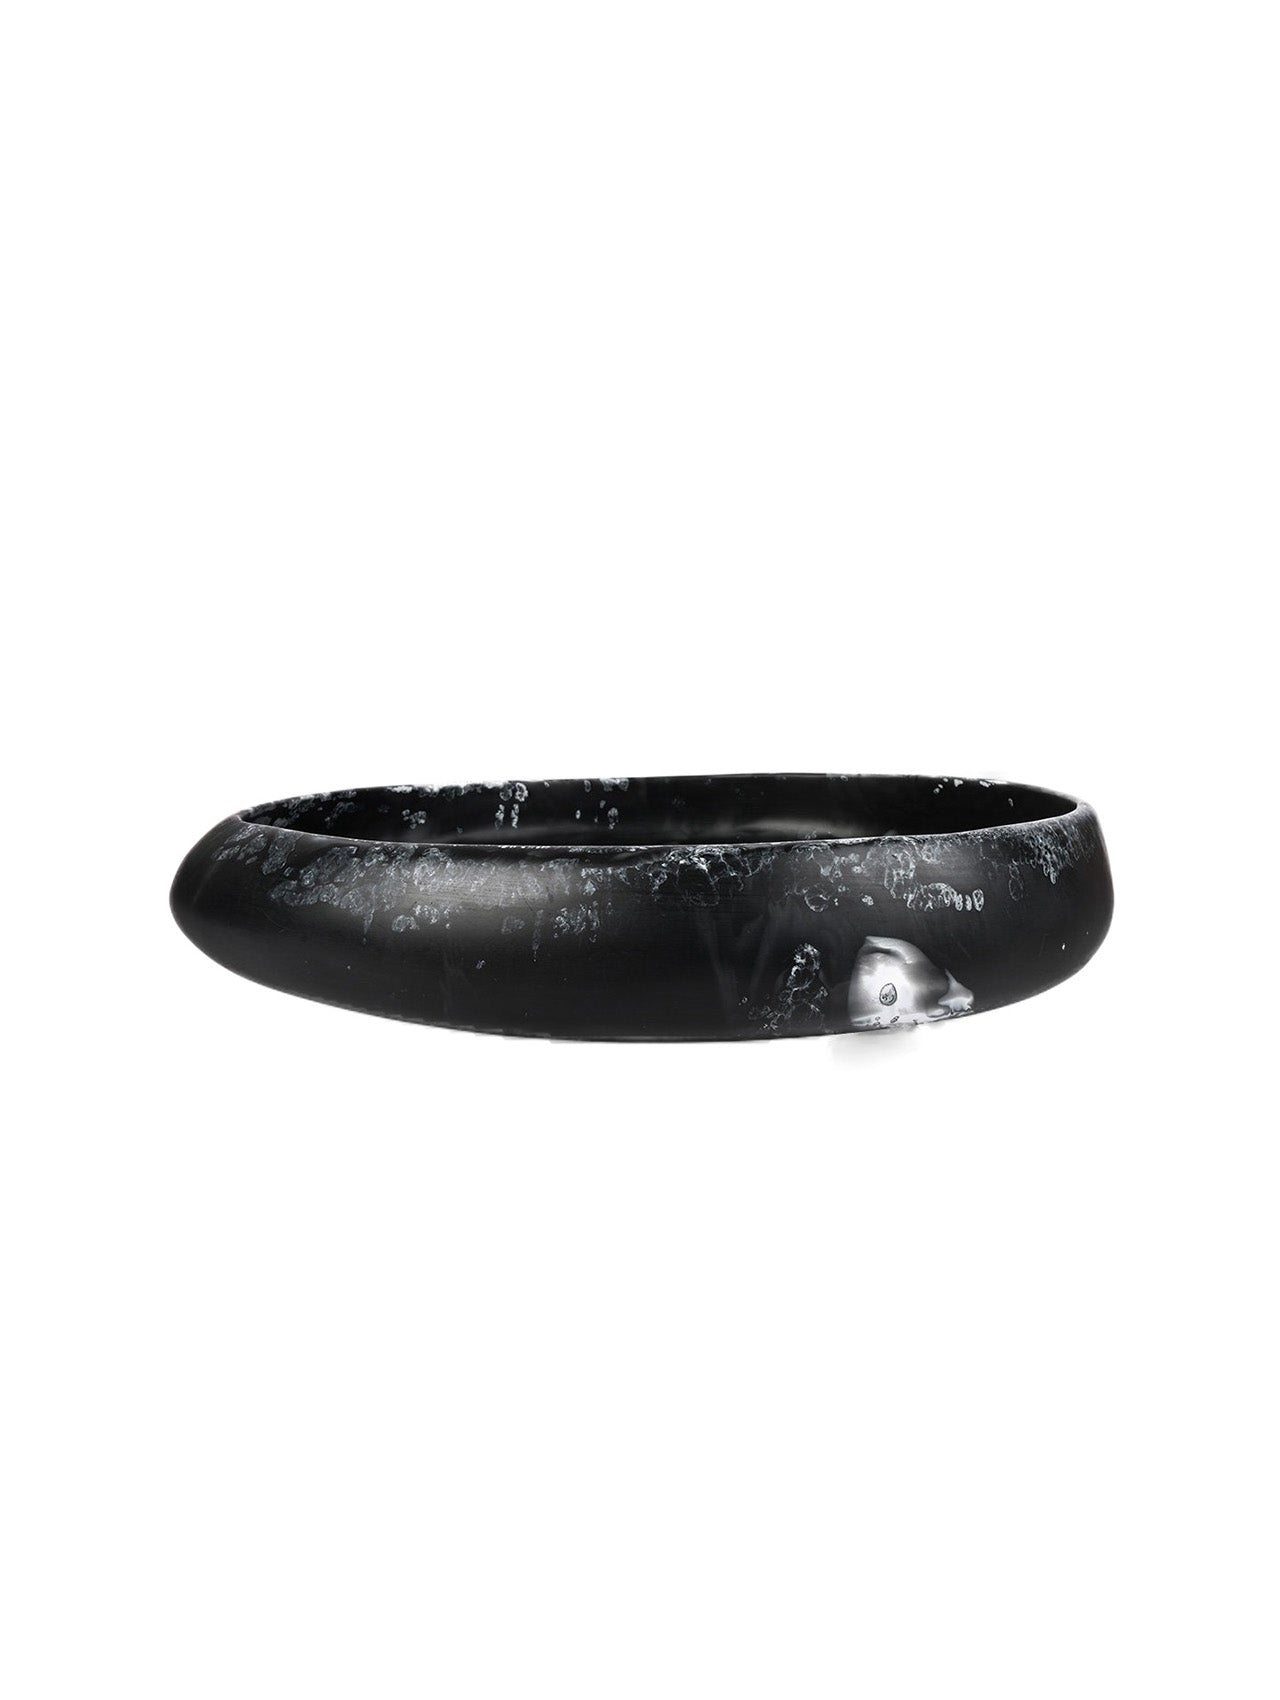 Large Black Marble Earth Bowl - Dinosaur Designs